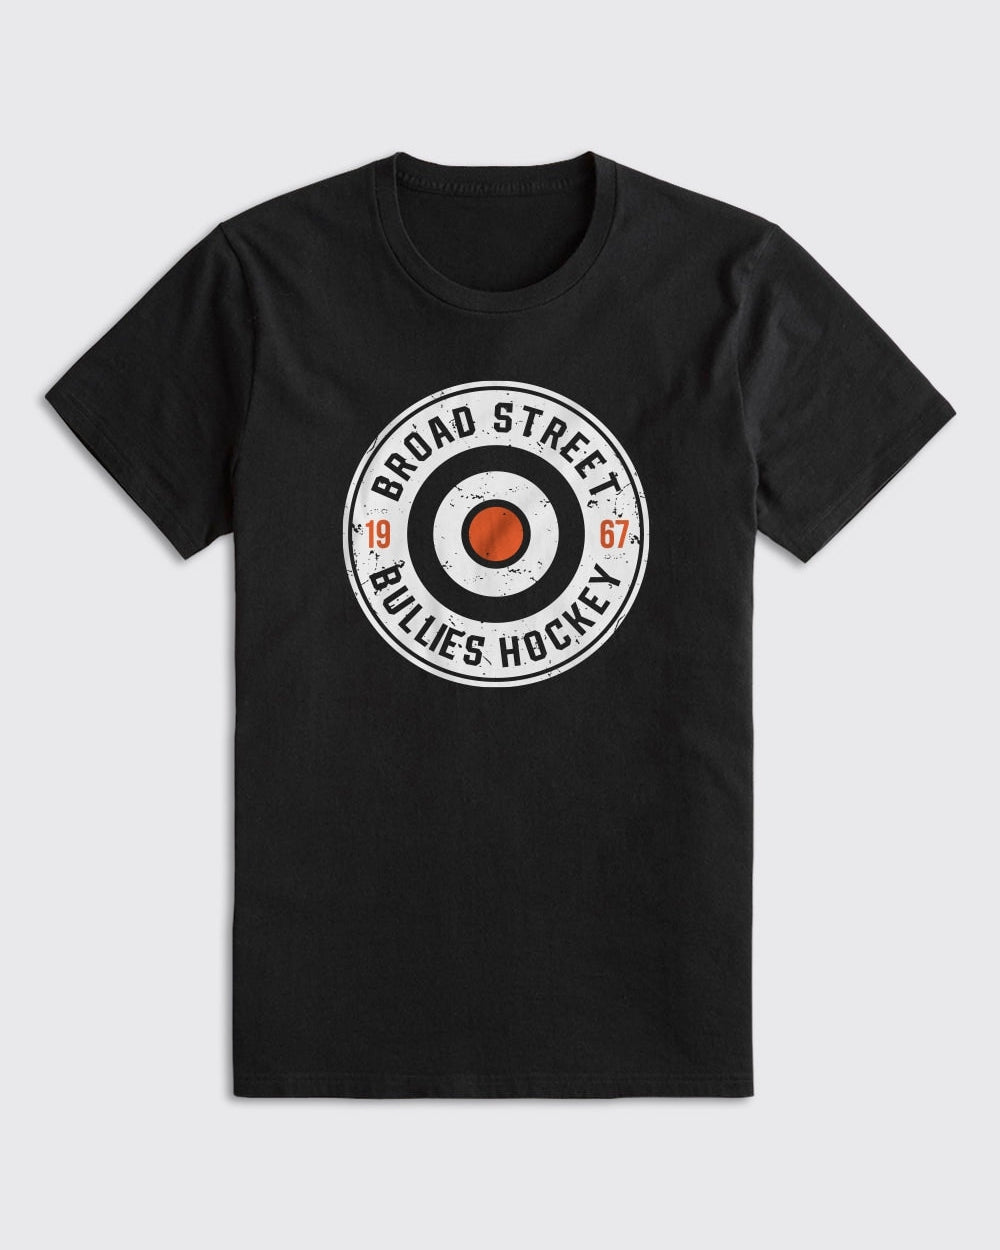 Philadelphia Flyers-Broad Street Bullies Hockey Shirt-Black-Philly Sports Shirts